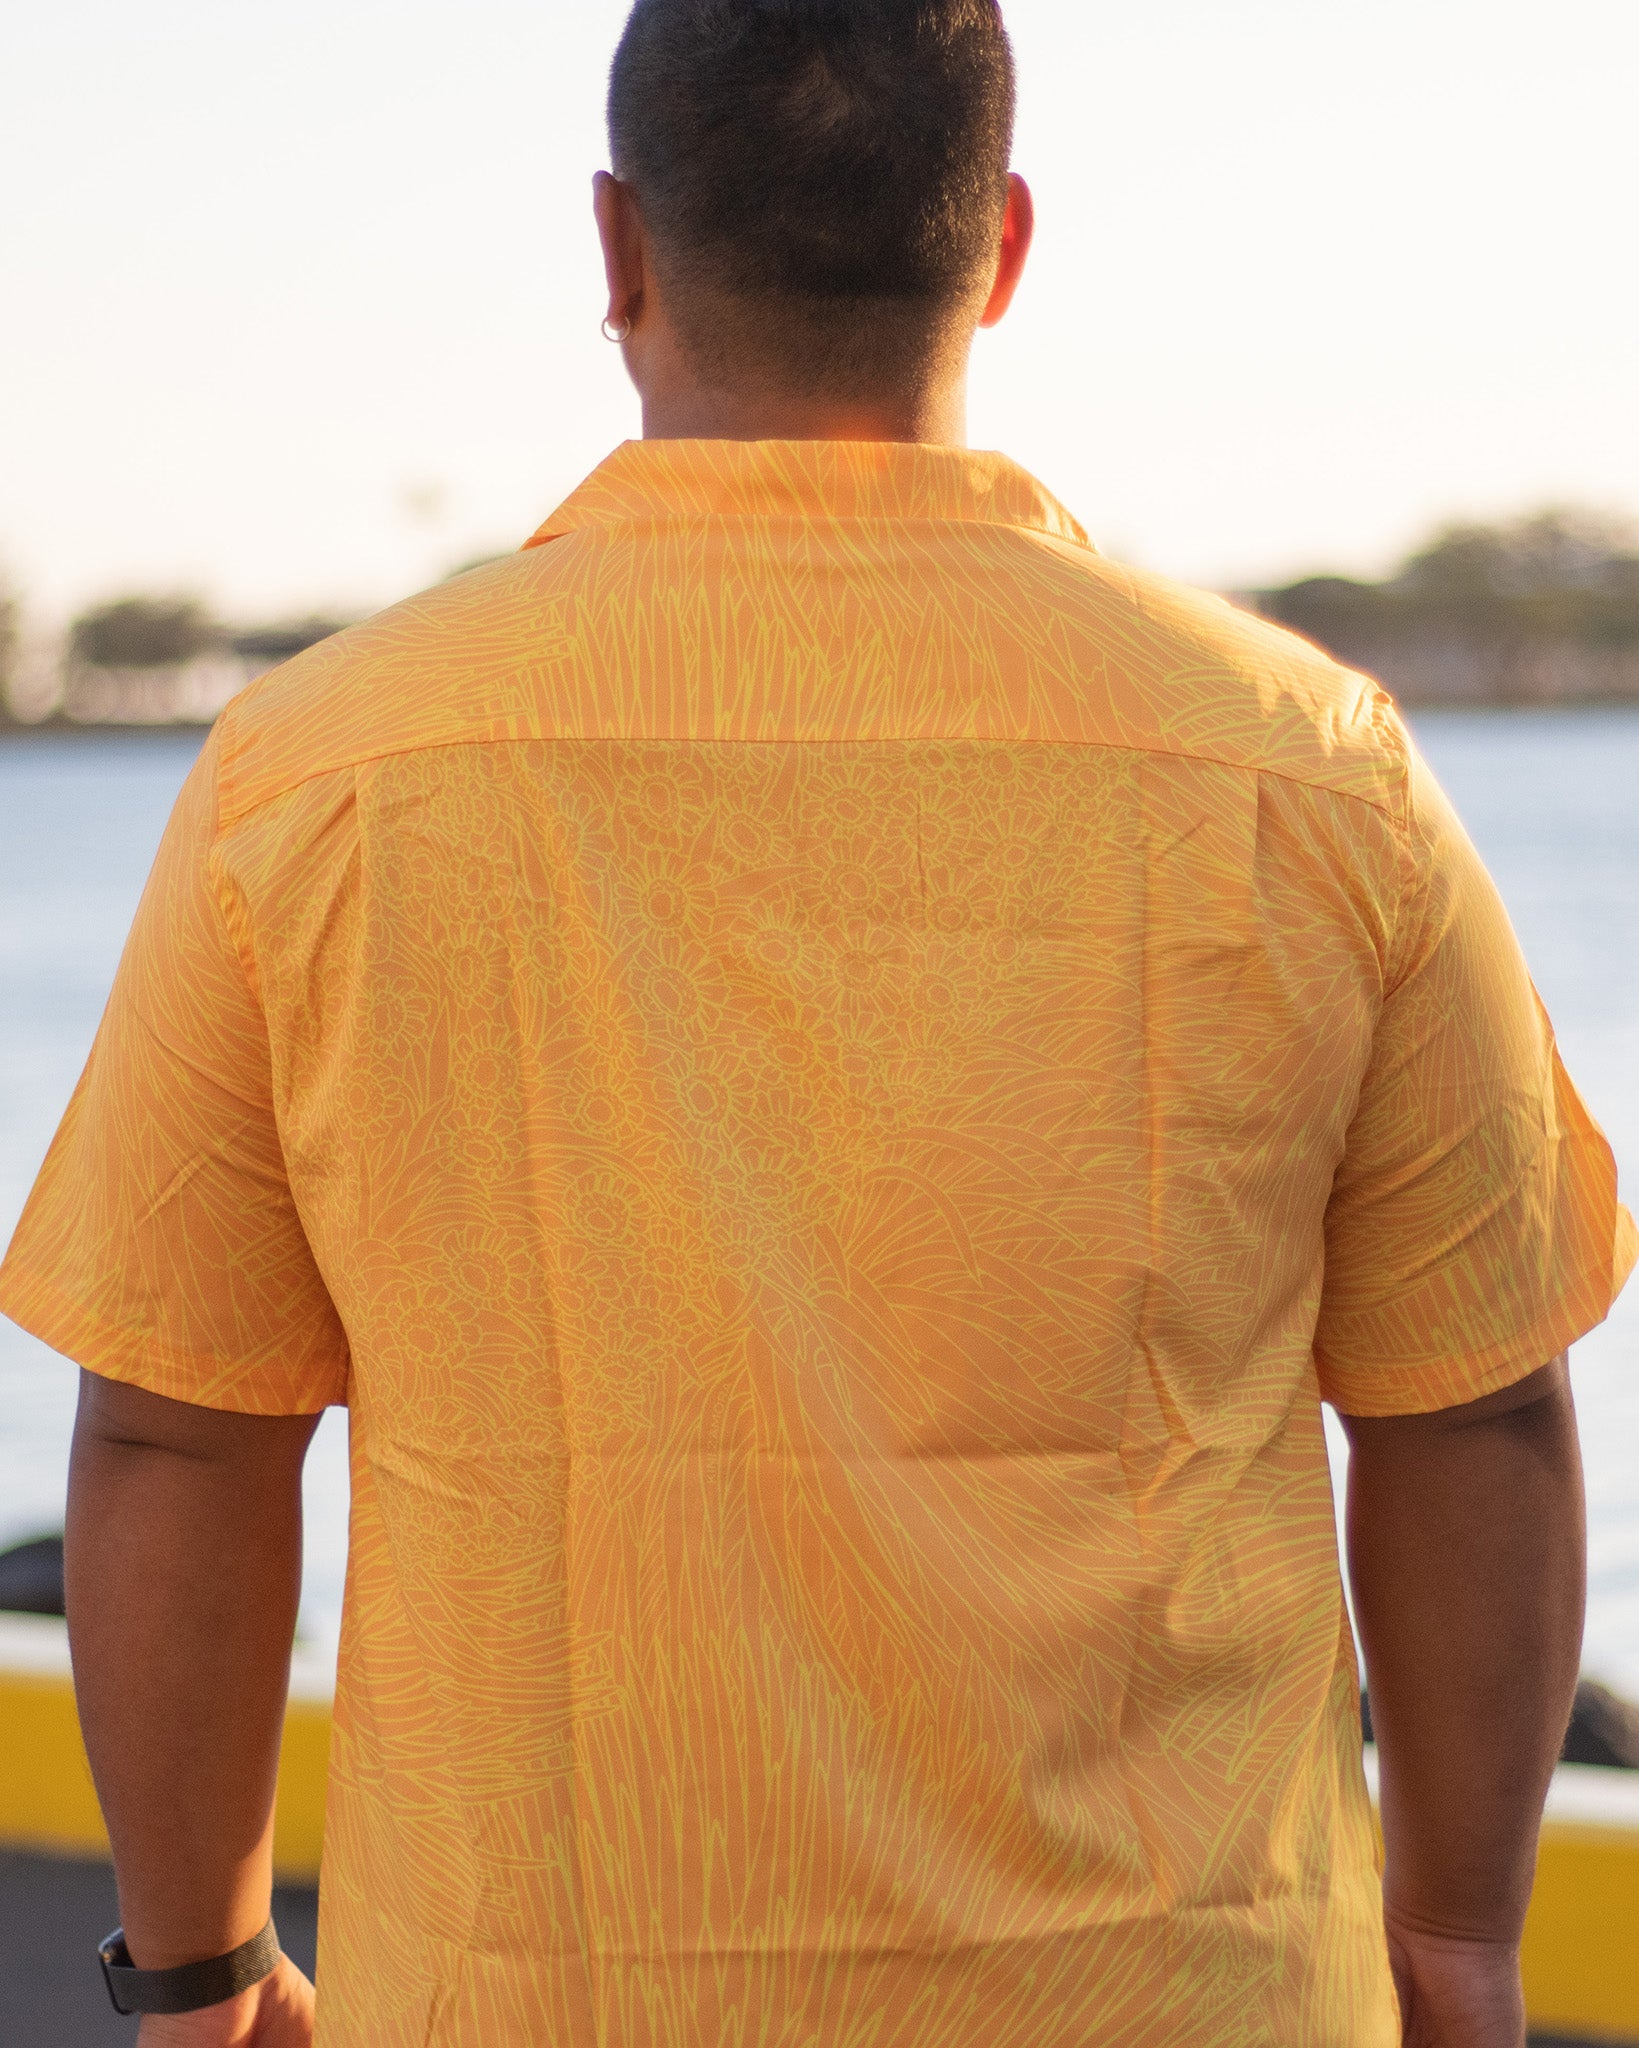 Pop-Up Mākeke - Kini Zamora - Silversword Aloha Shirt - Yellow - Back View